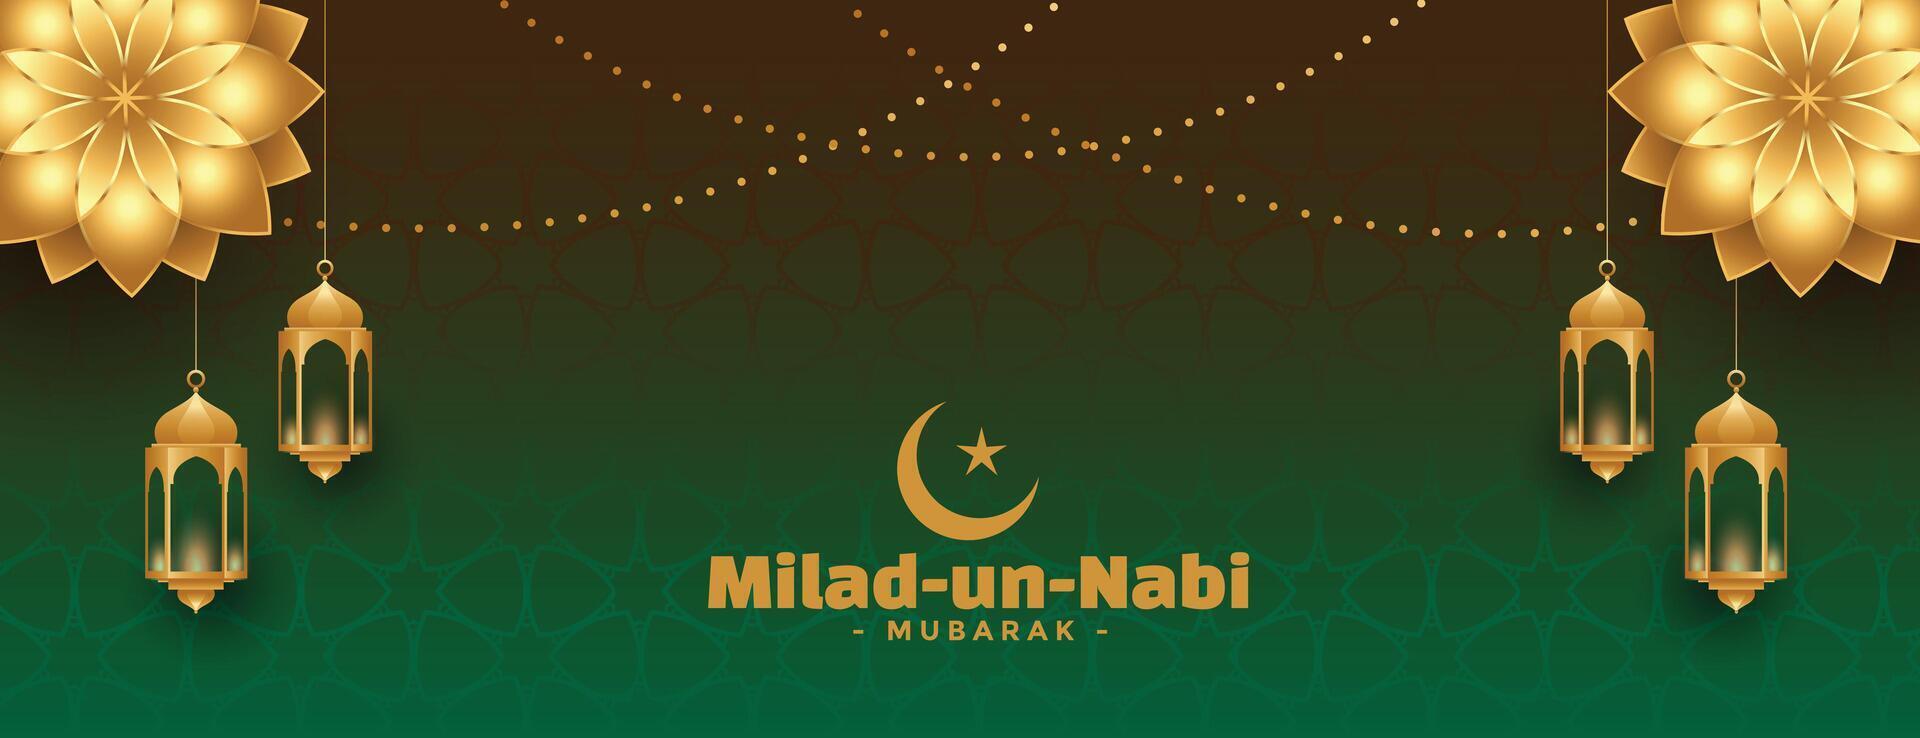 milad un nabi Mubarak desejos bandeira com dourado flor vetor